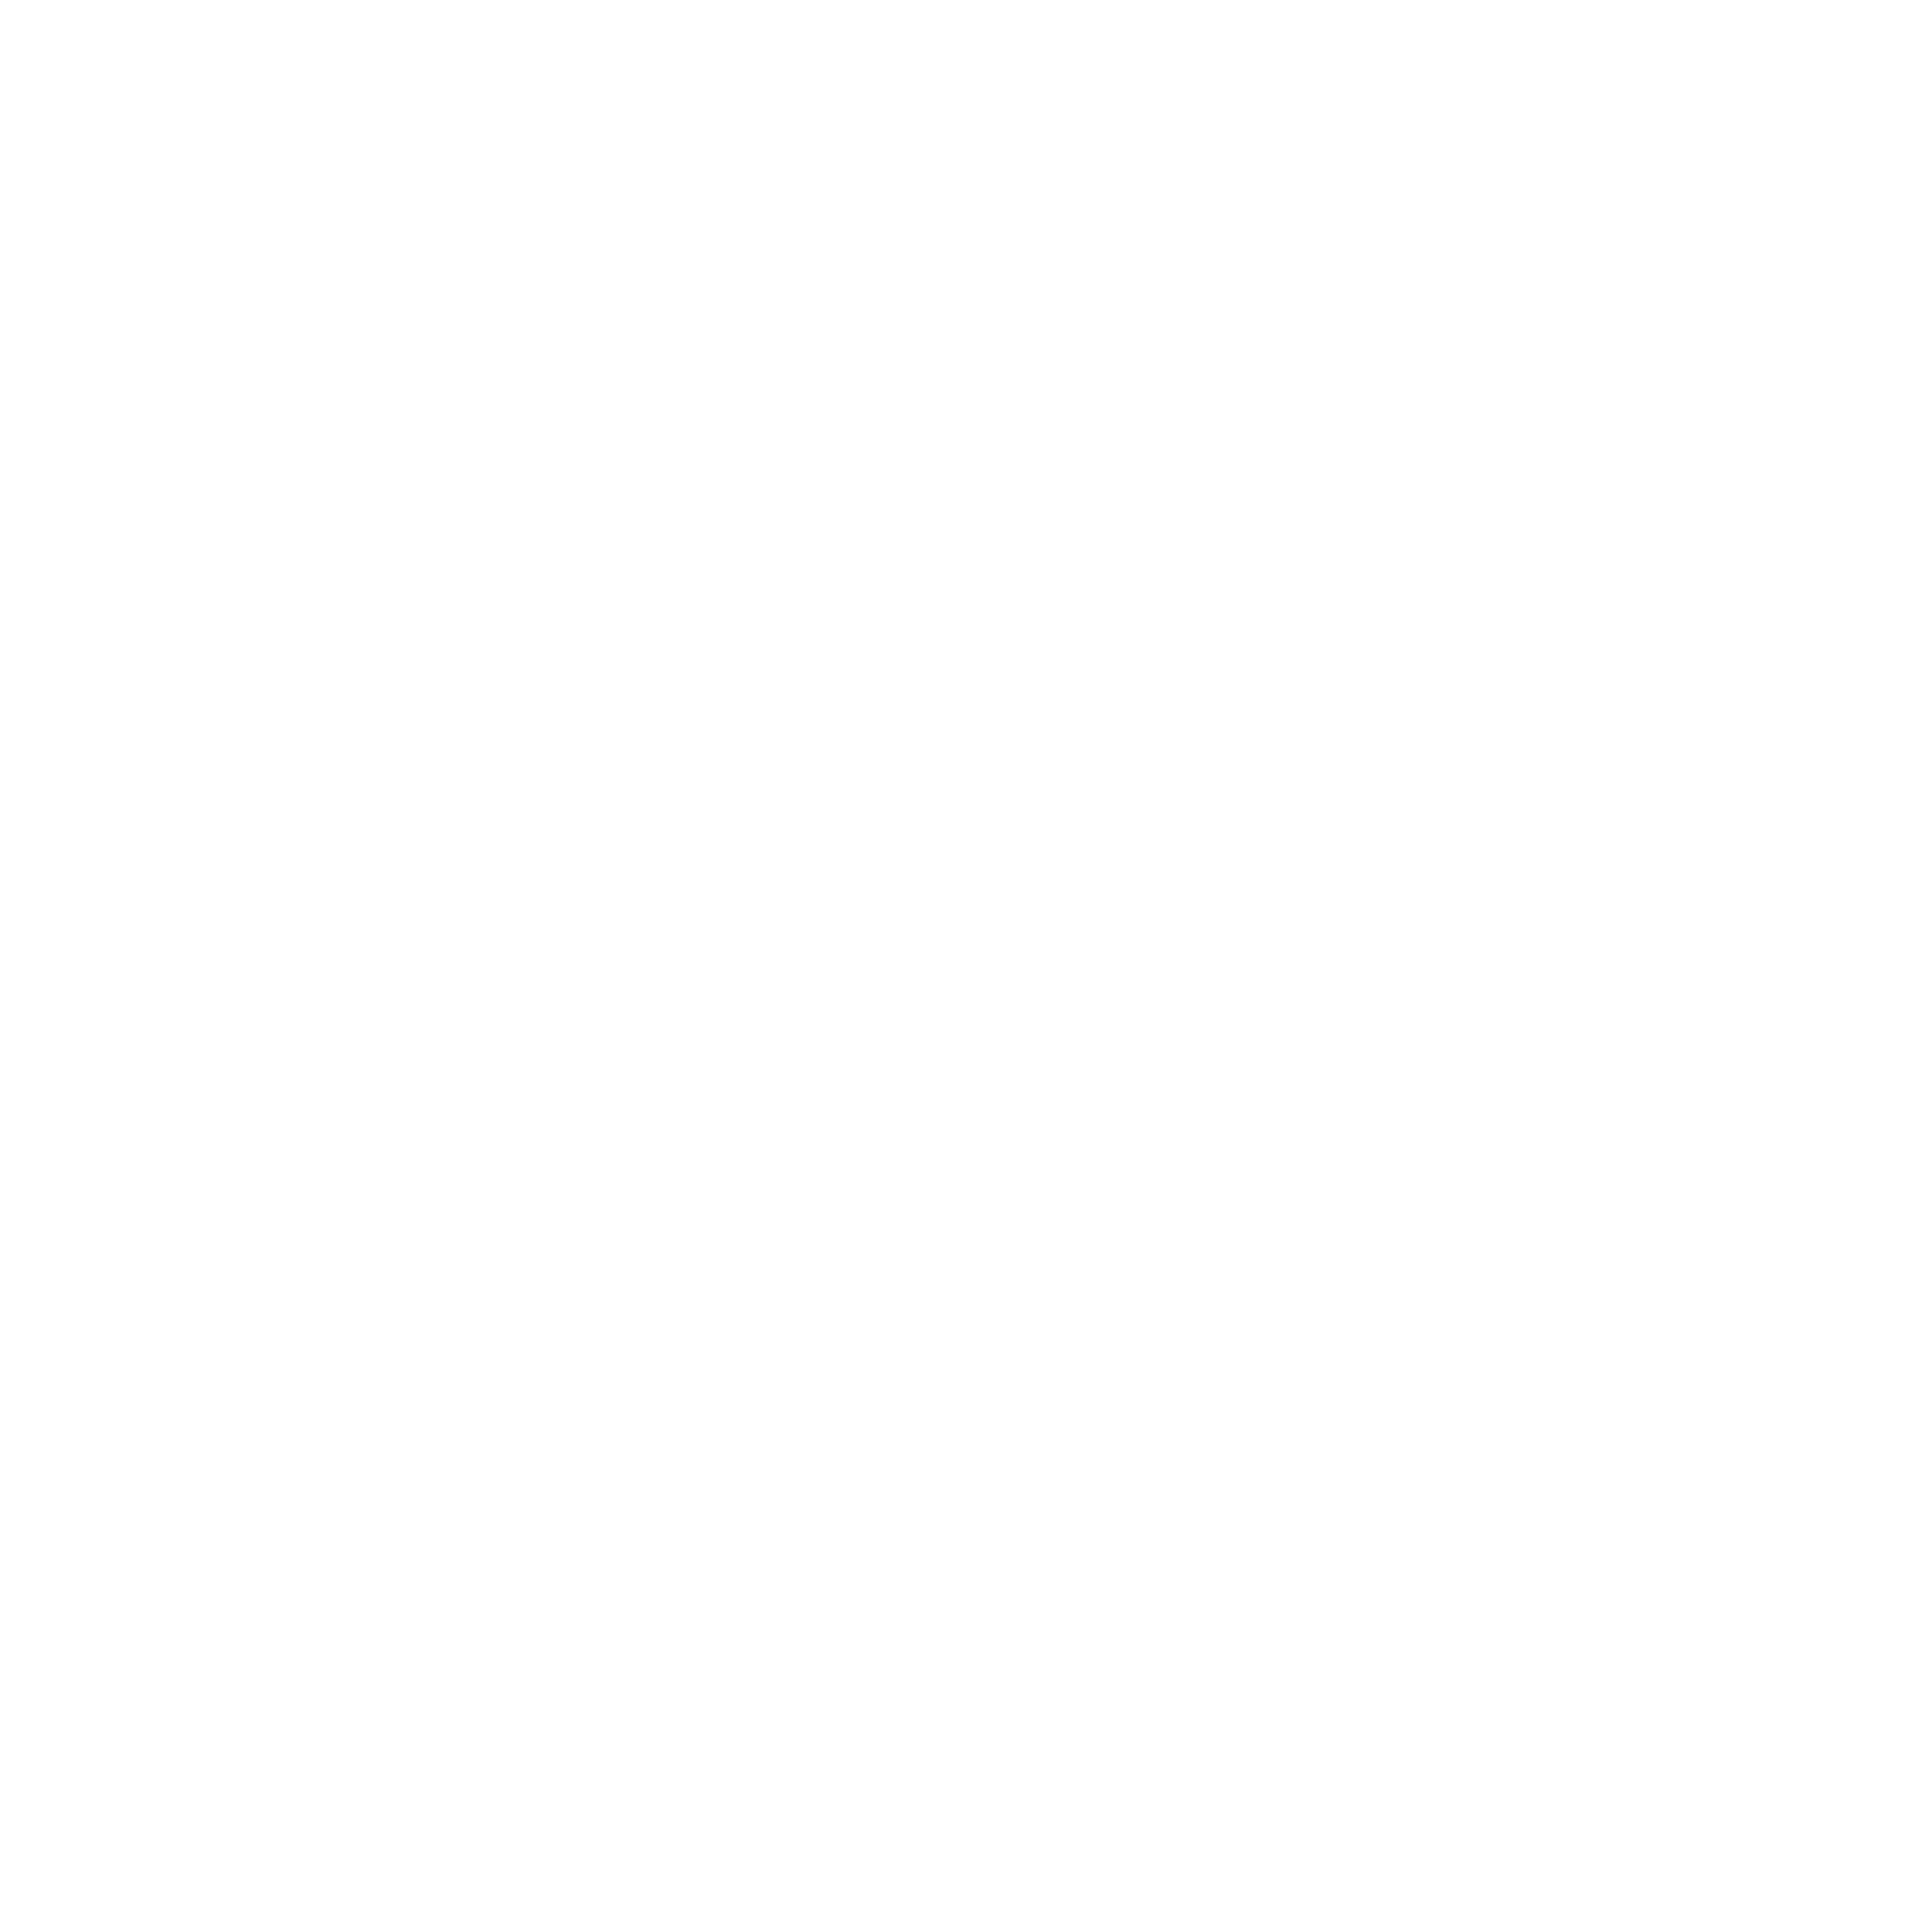 google-white-logo-0-2048x2048